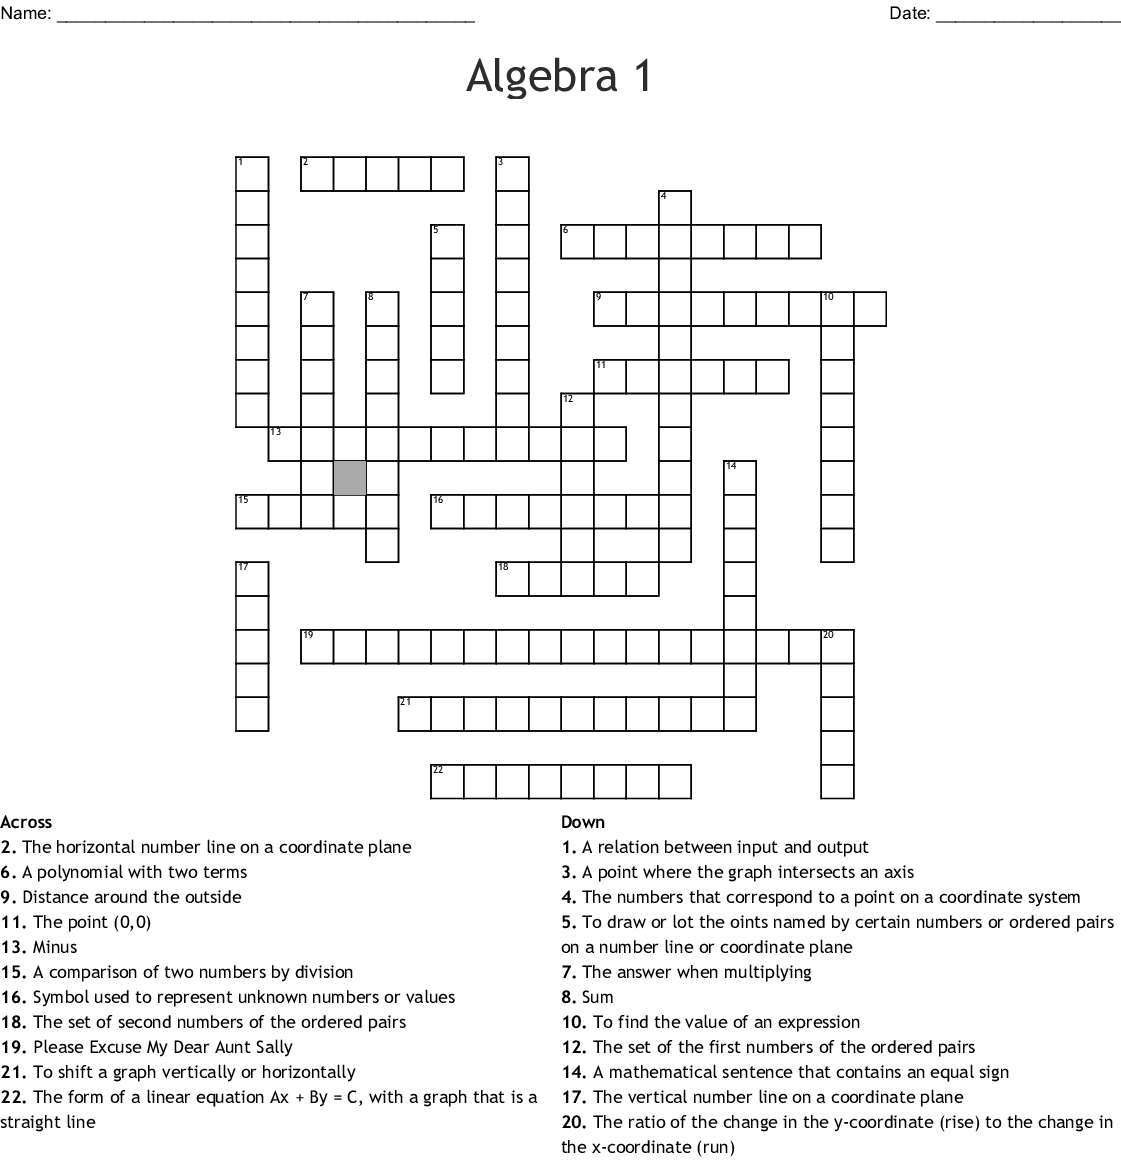 Algebra 1 Crossword - Wordmint - Free Printable Crossword Puzzle #1 Answers